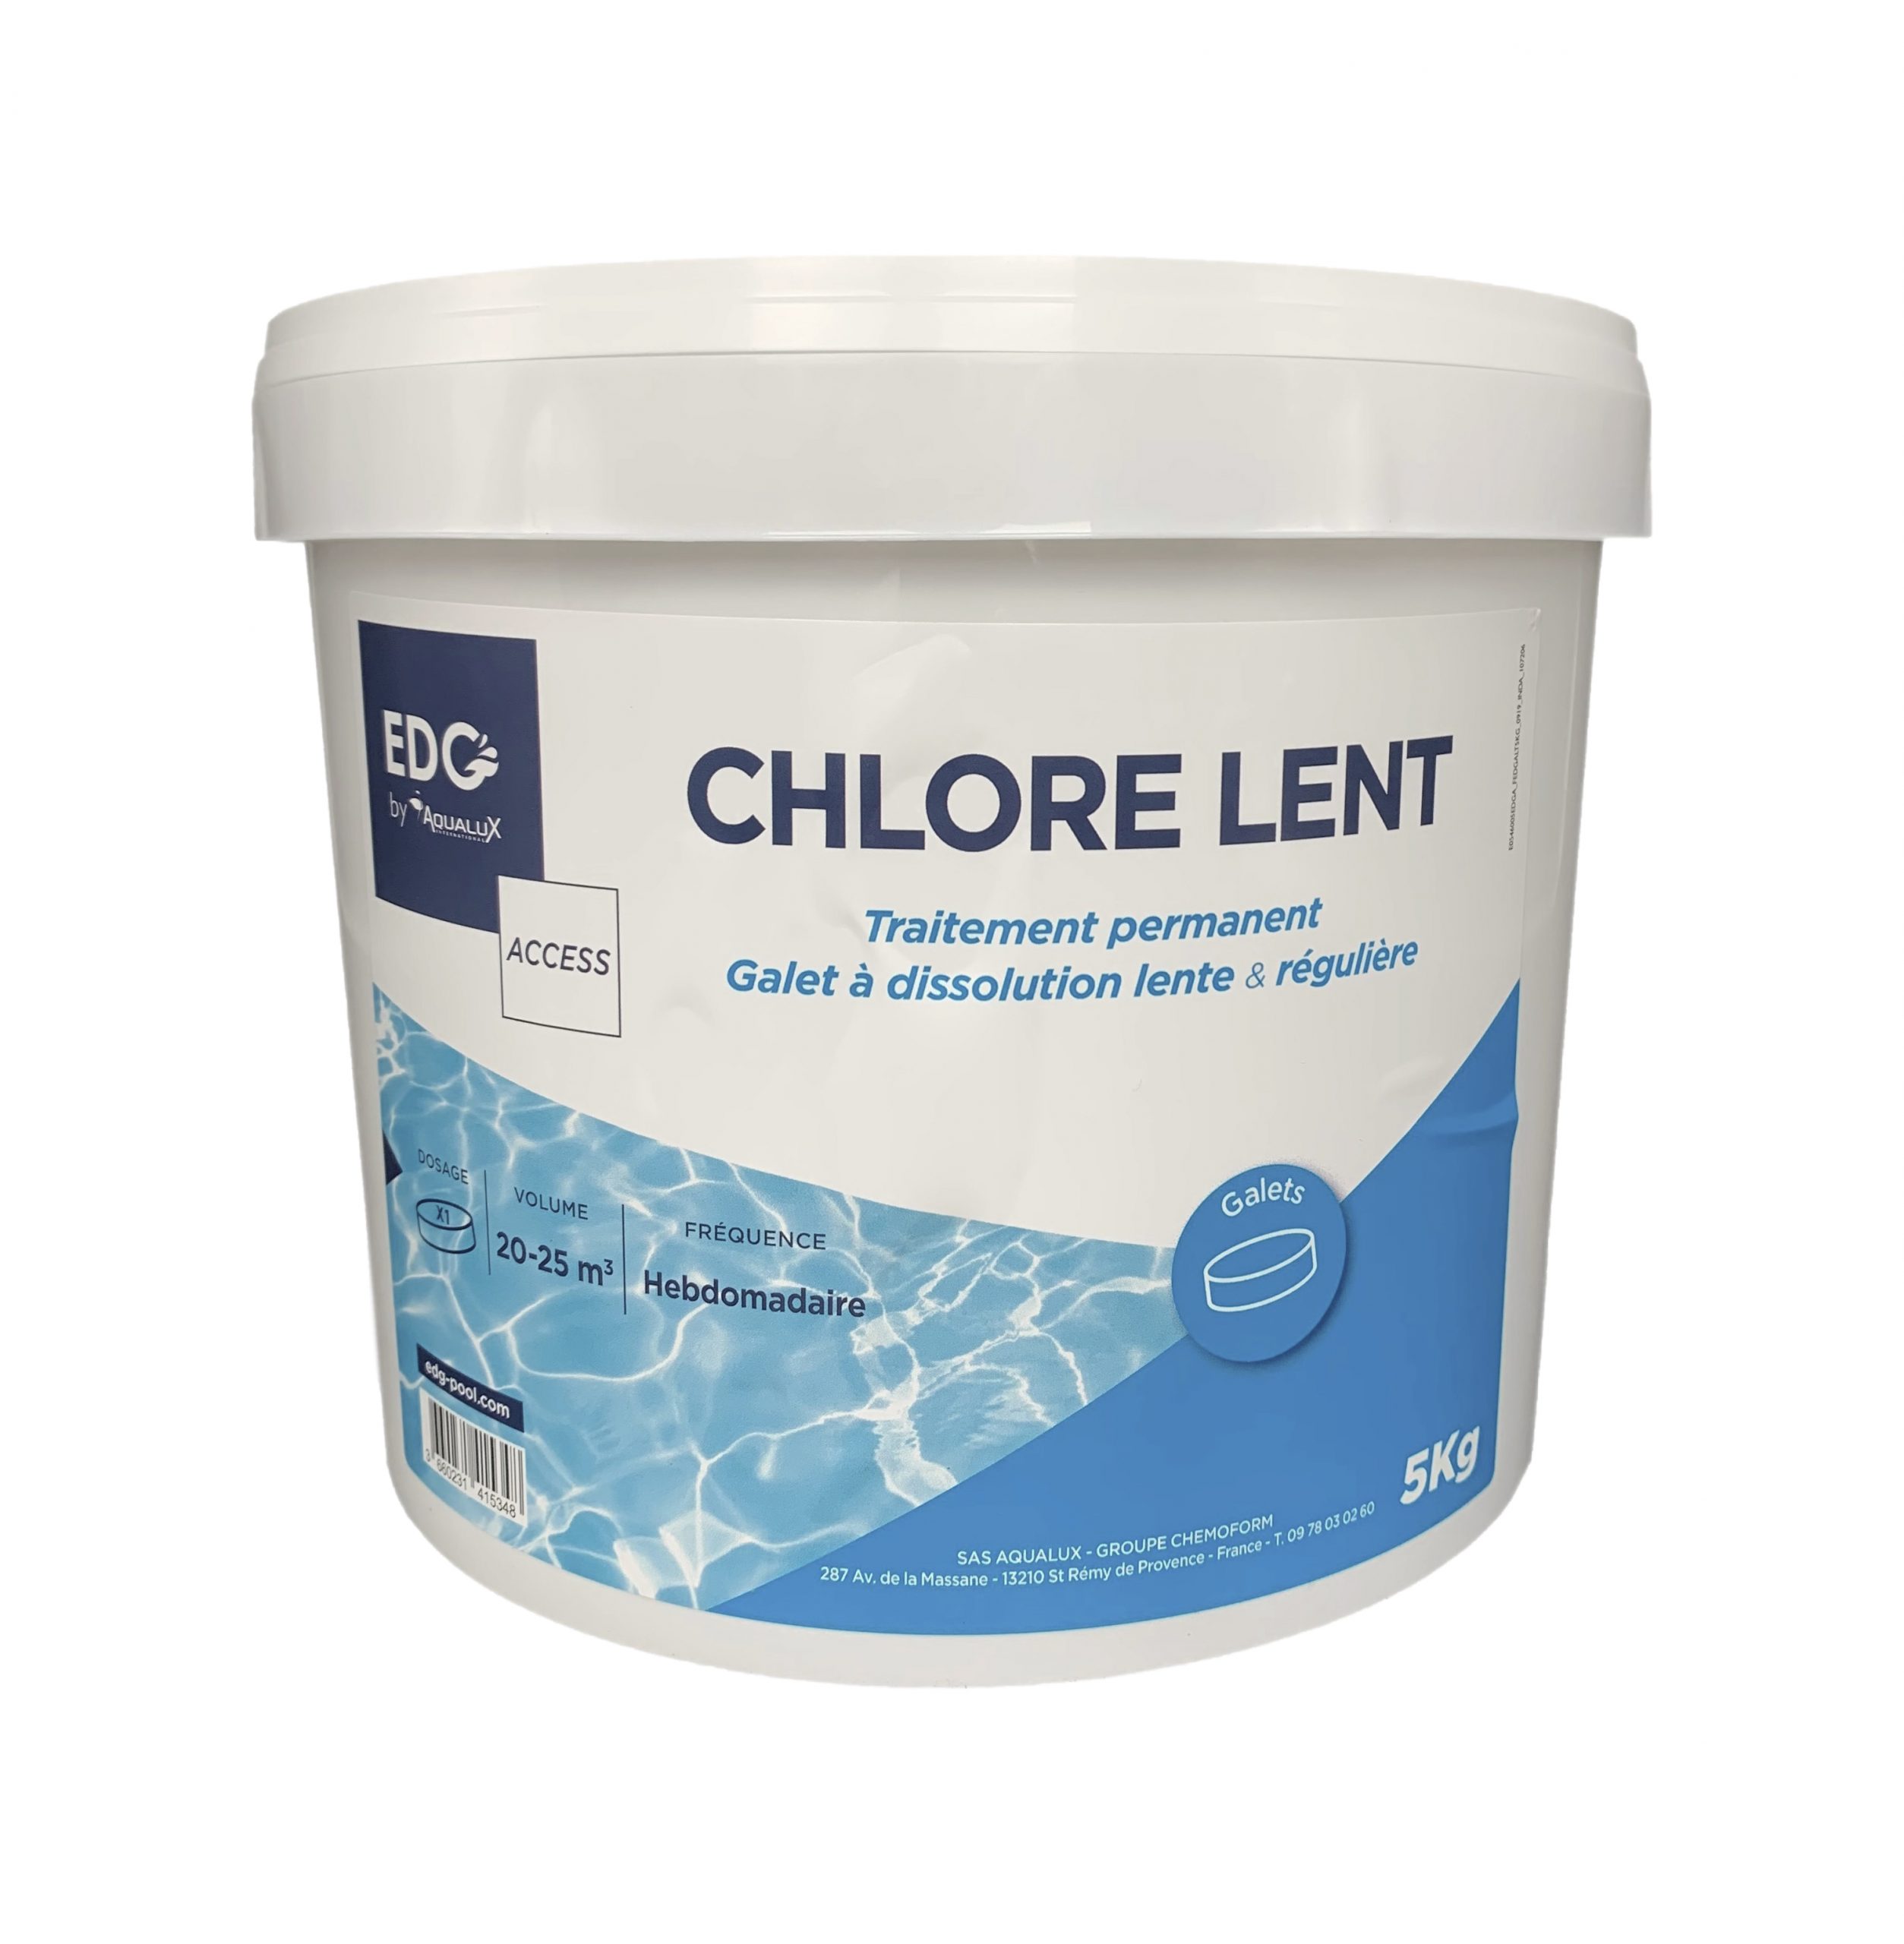 Chlore choc granulés, pot de 1 kg Edg By Aqualux